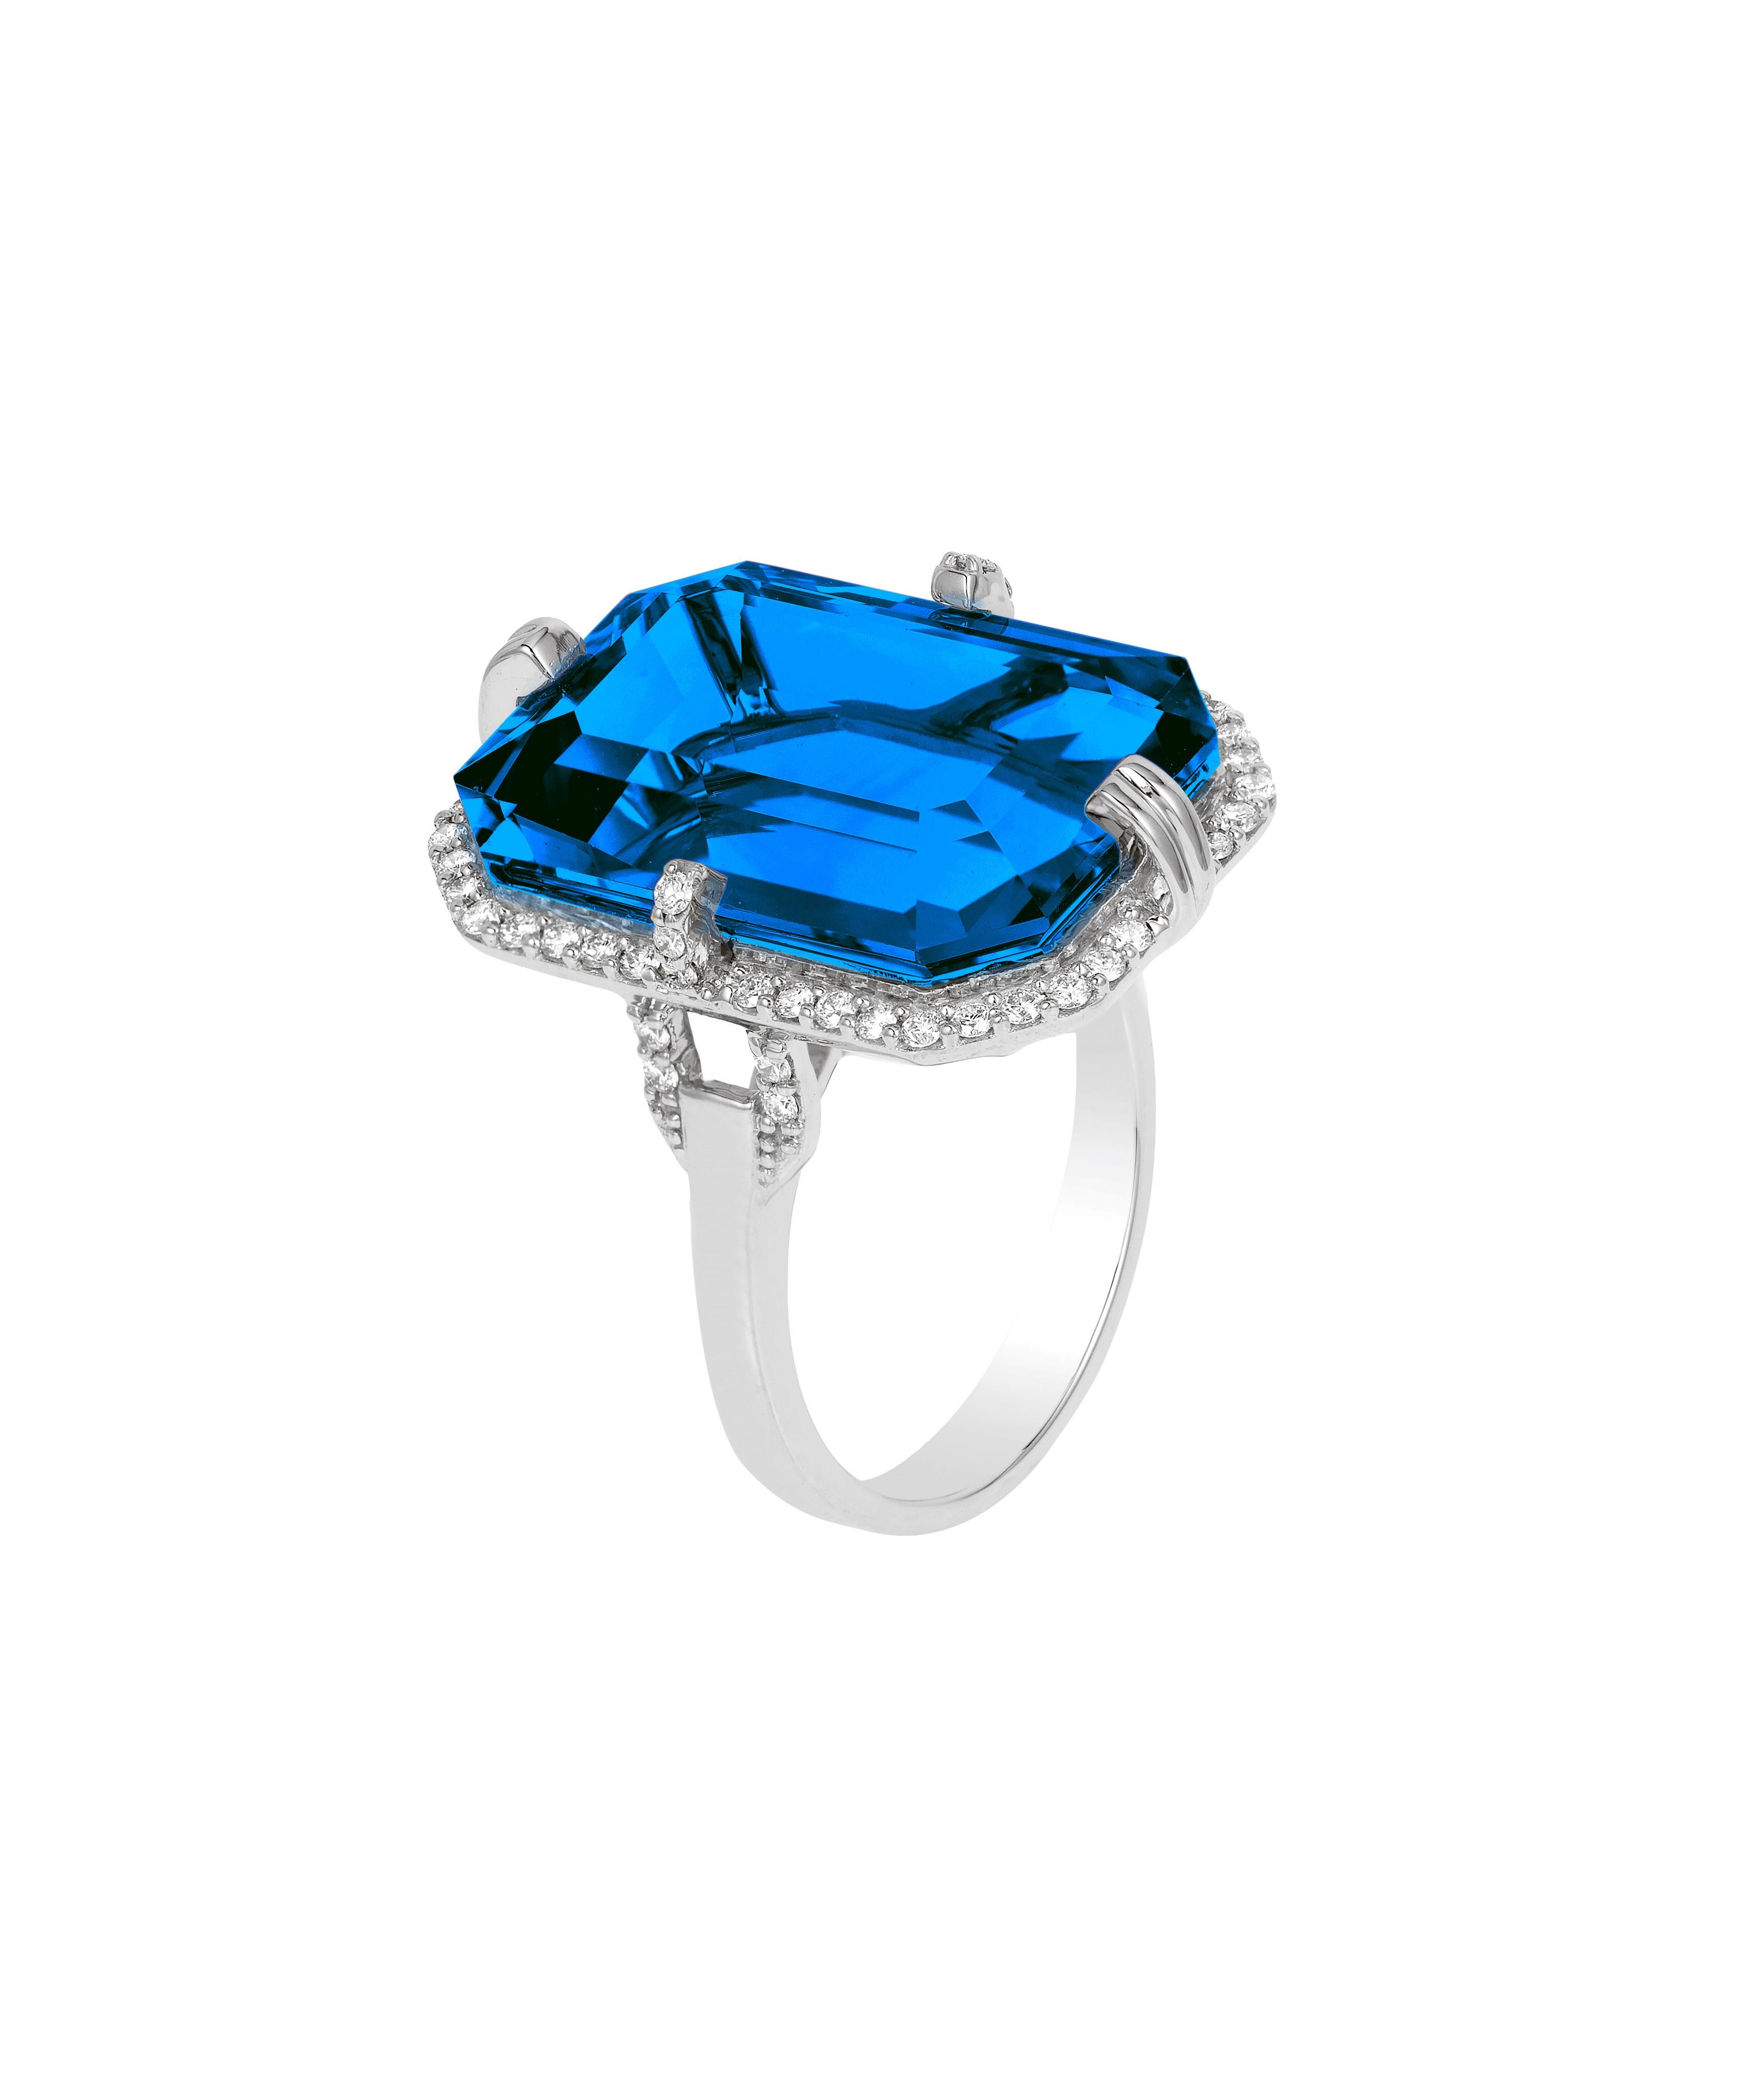 Contemporary Goshwara London Blue Topaz with Diamonds Ring For Sale